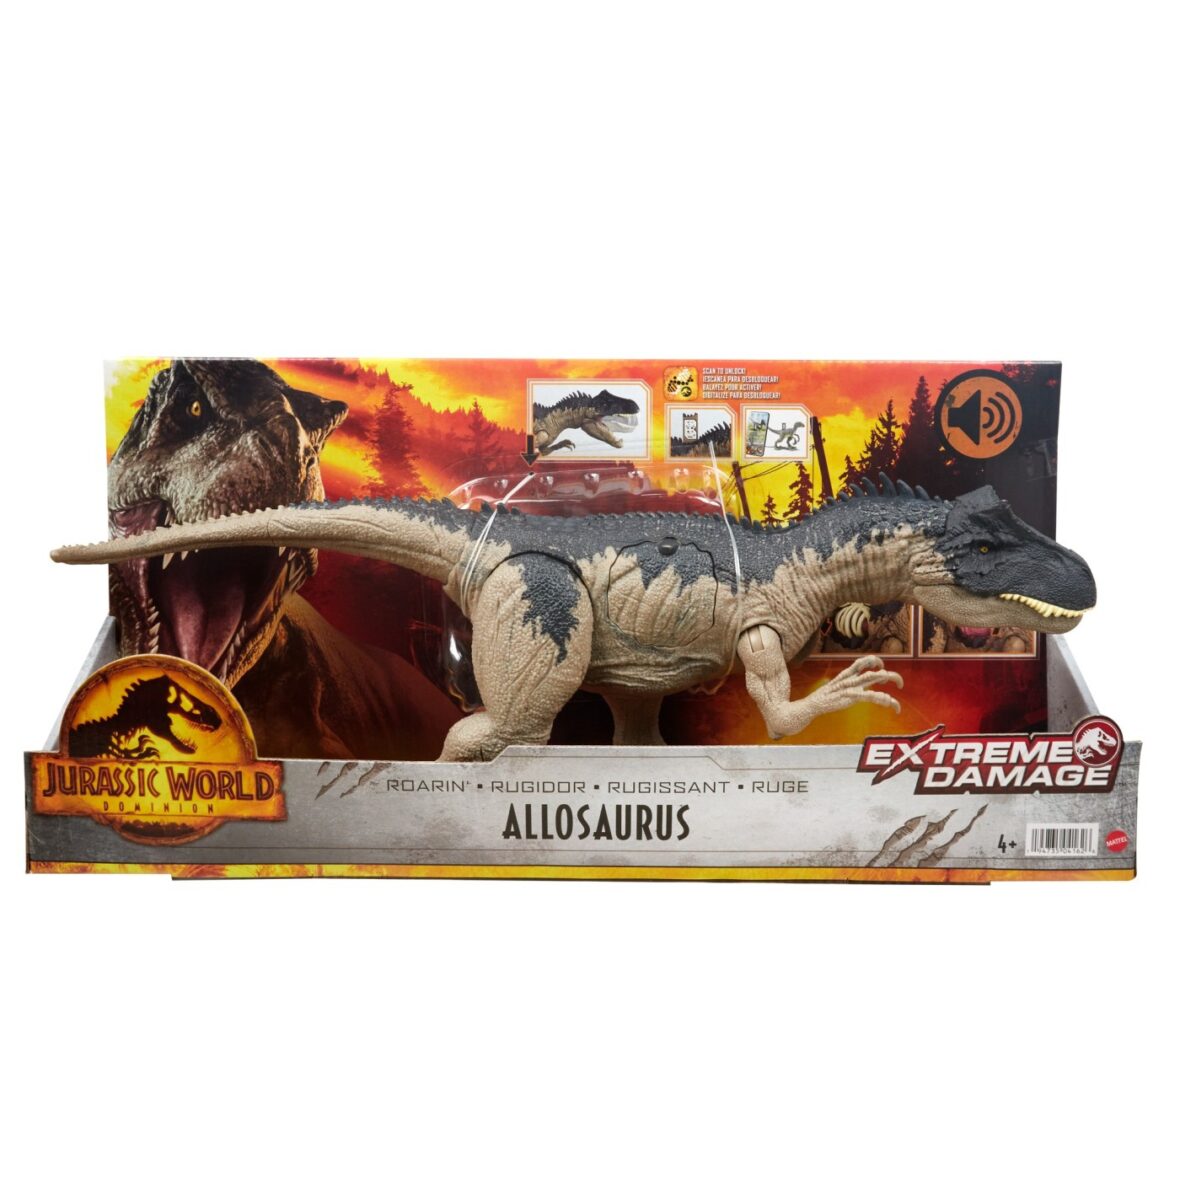 Jurassic World Dominion Extreme Damage Dinozaur Allosaurus